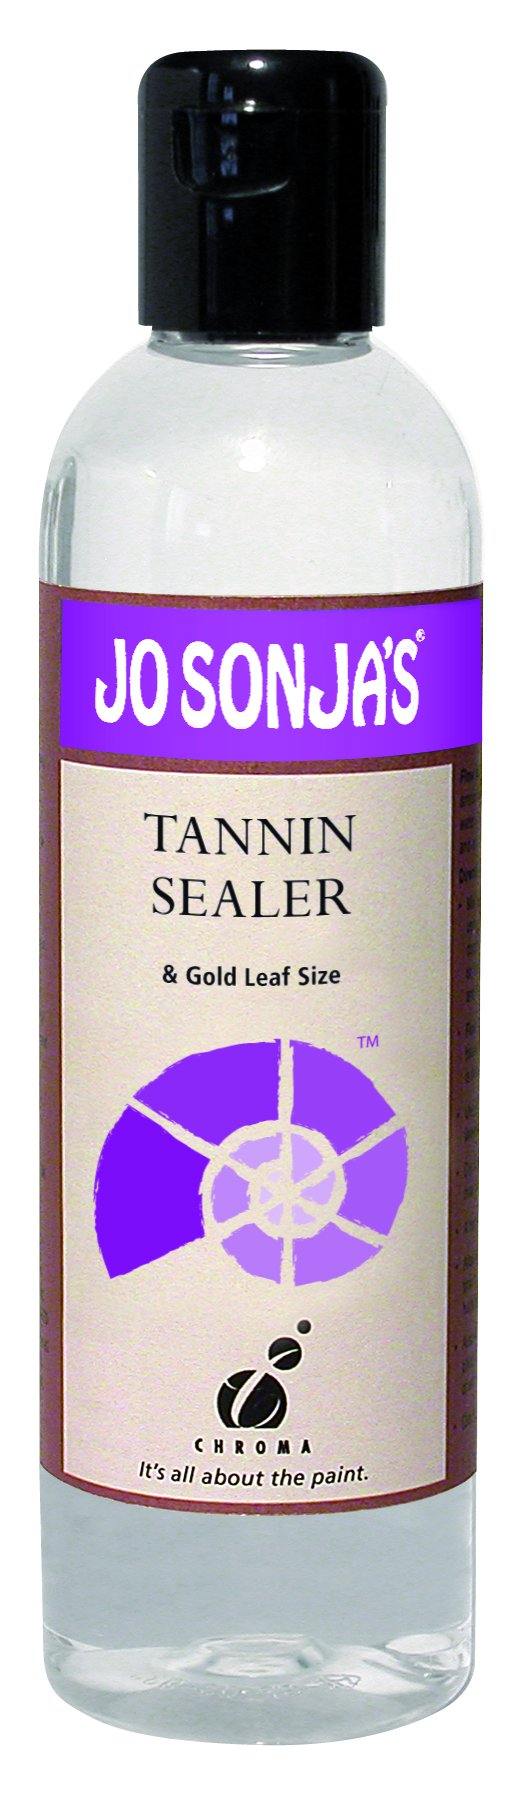 Jo Sonja's Tannin Sealer (& Goldleaf Size) 250ml - Art Supplies Australia